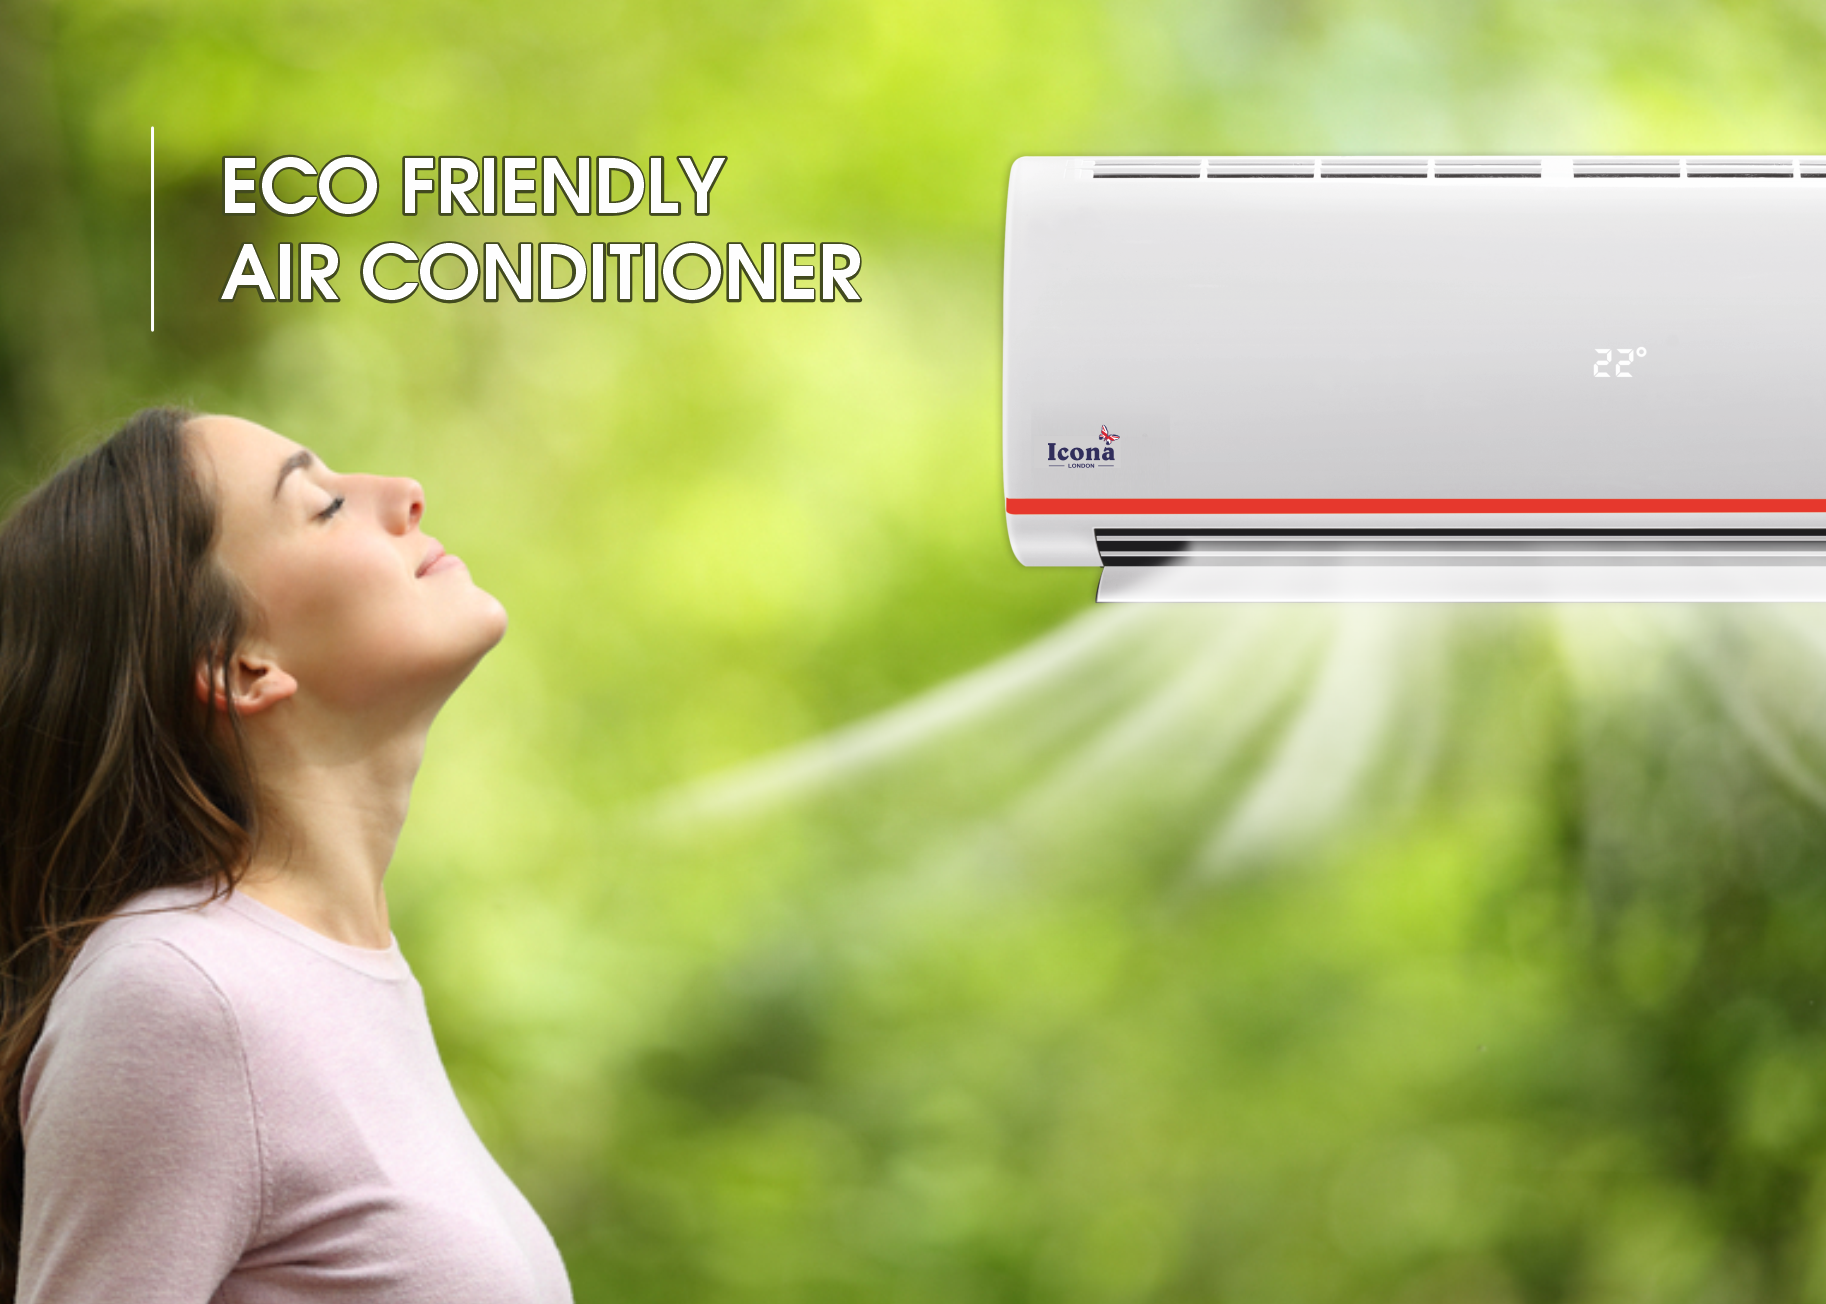 Icona London's Air Conditioner